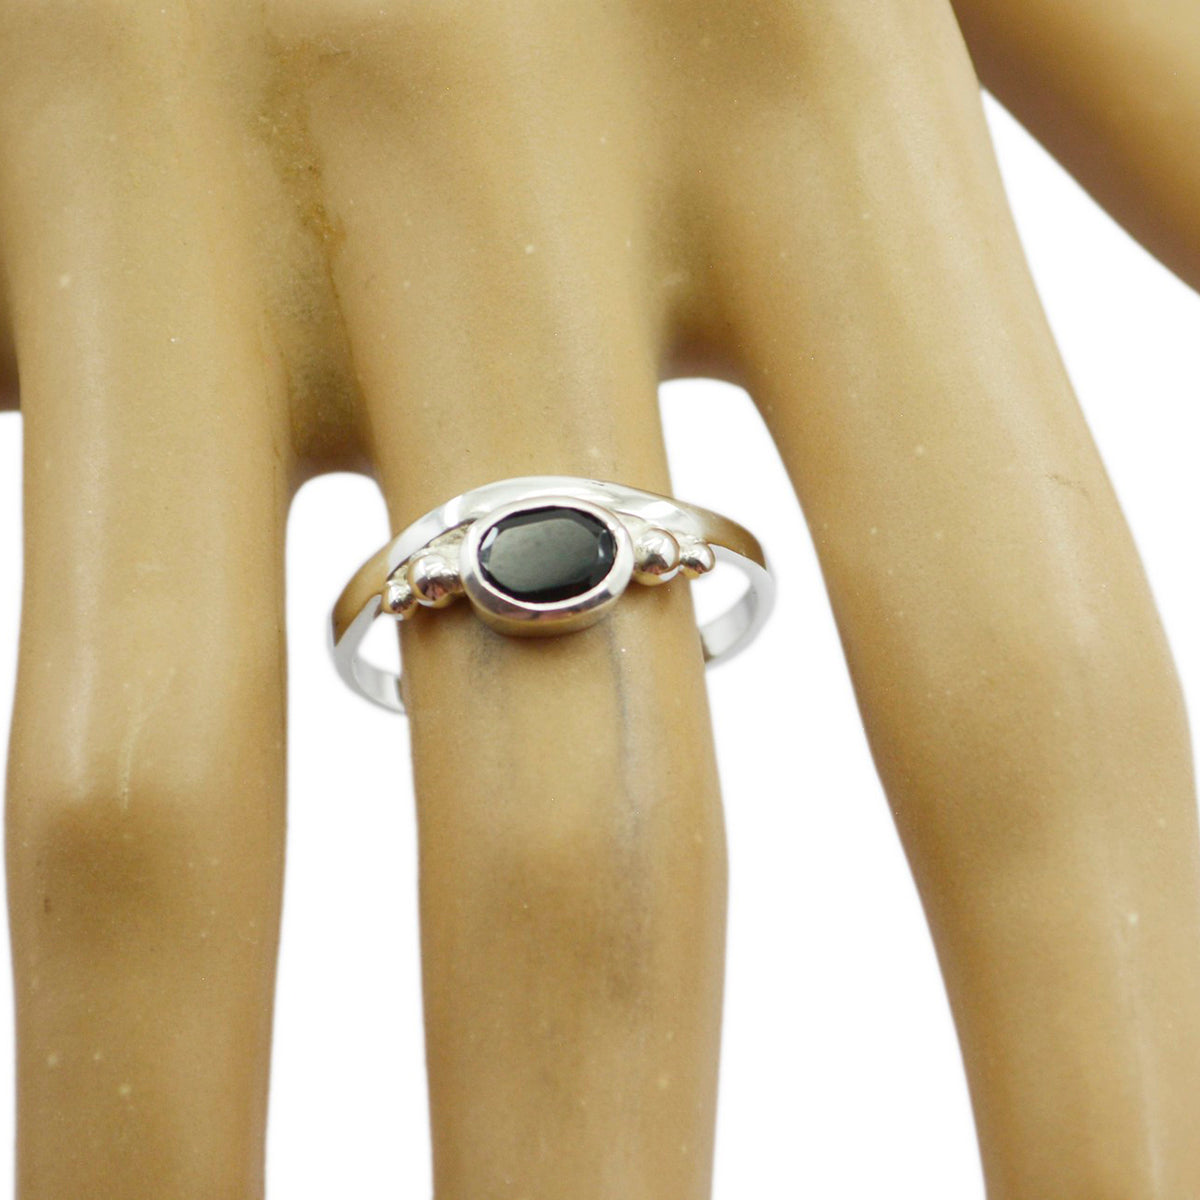 Riyo Tempting Gems Black Onyx 925 Sterling Silver Ring Hand Jewelry